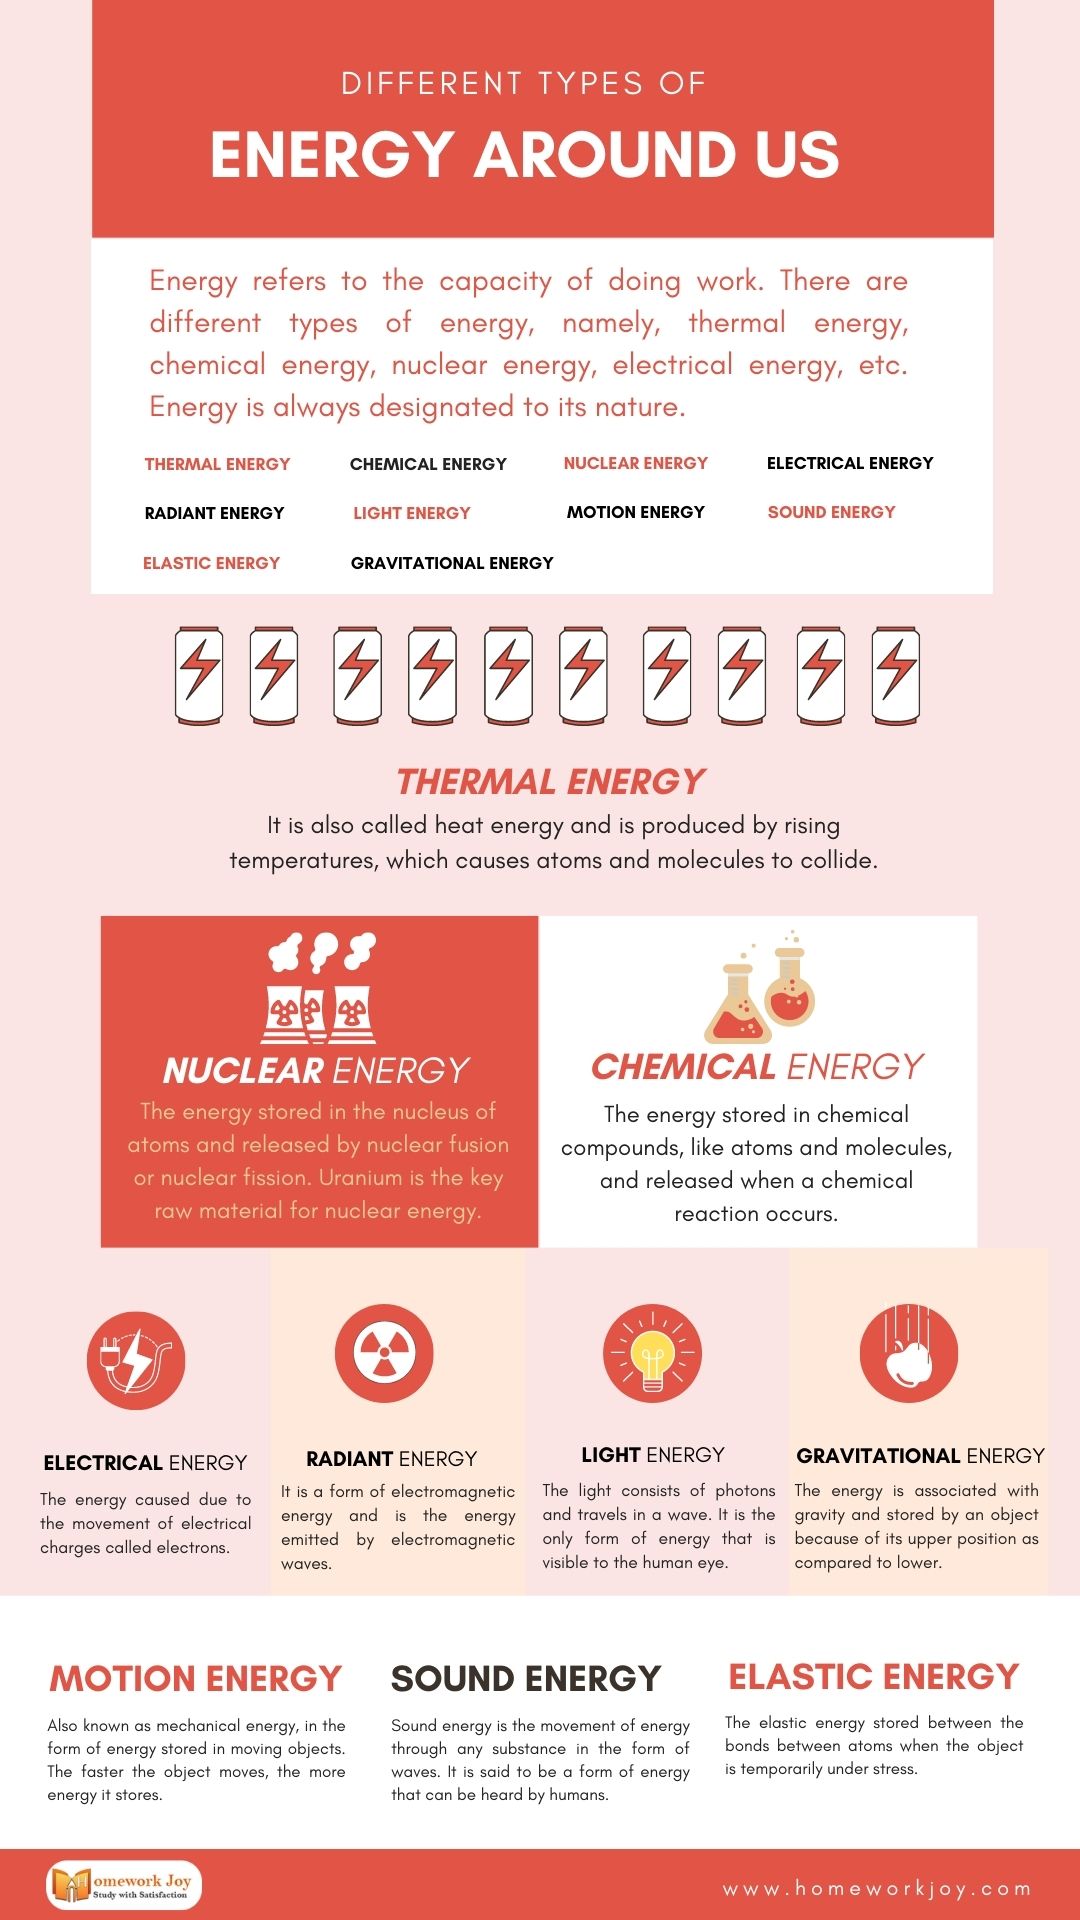 Different Types of Energy Around Us